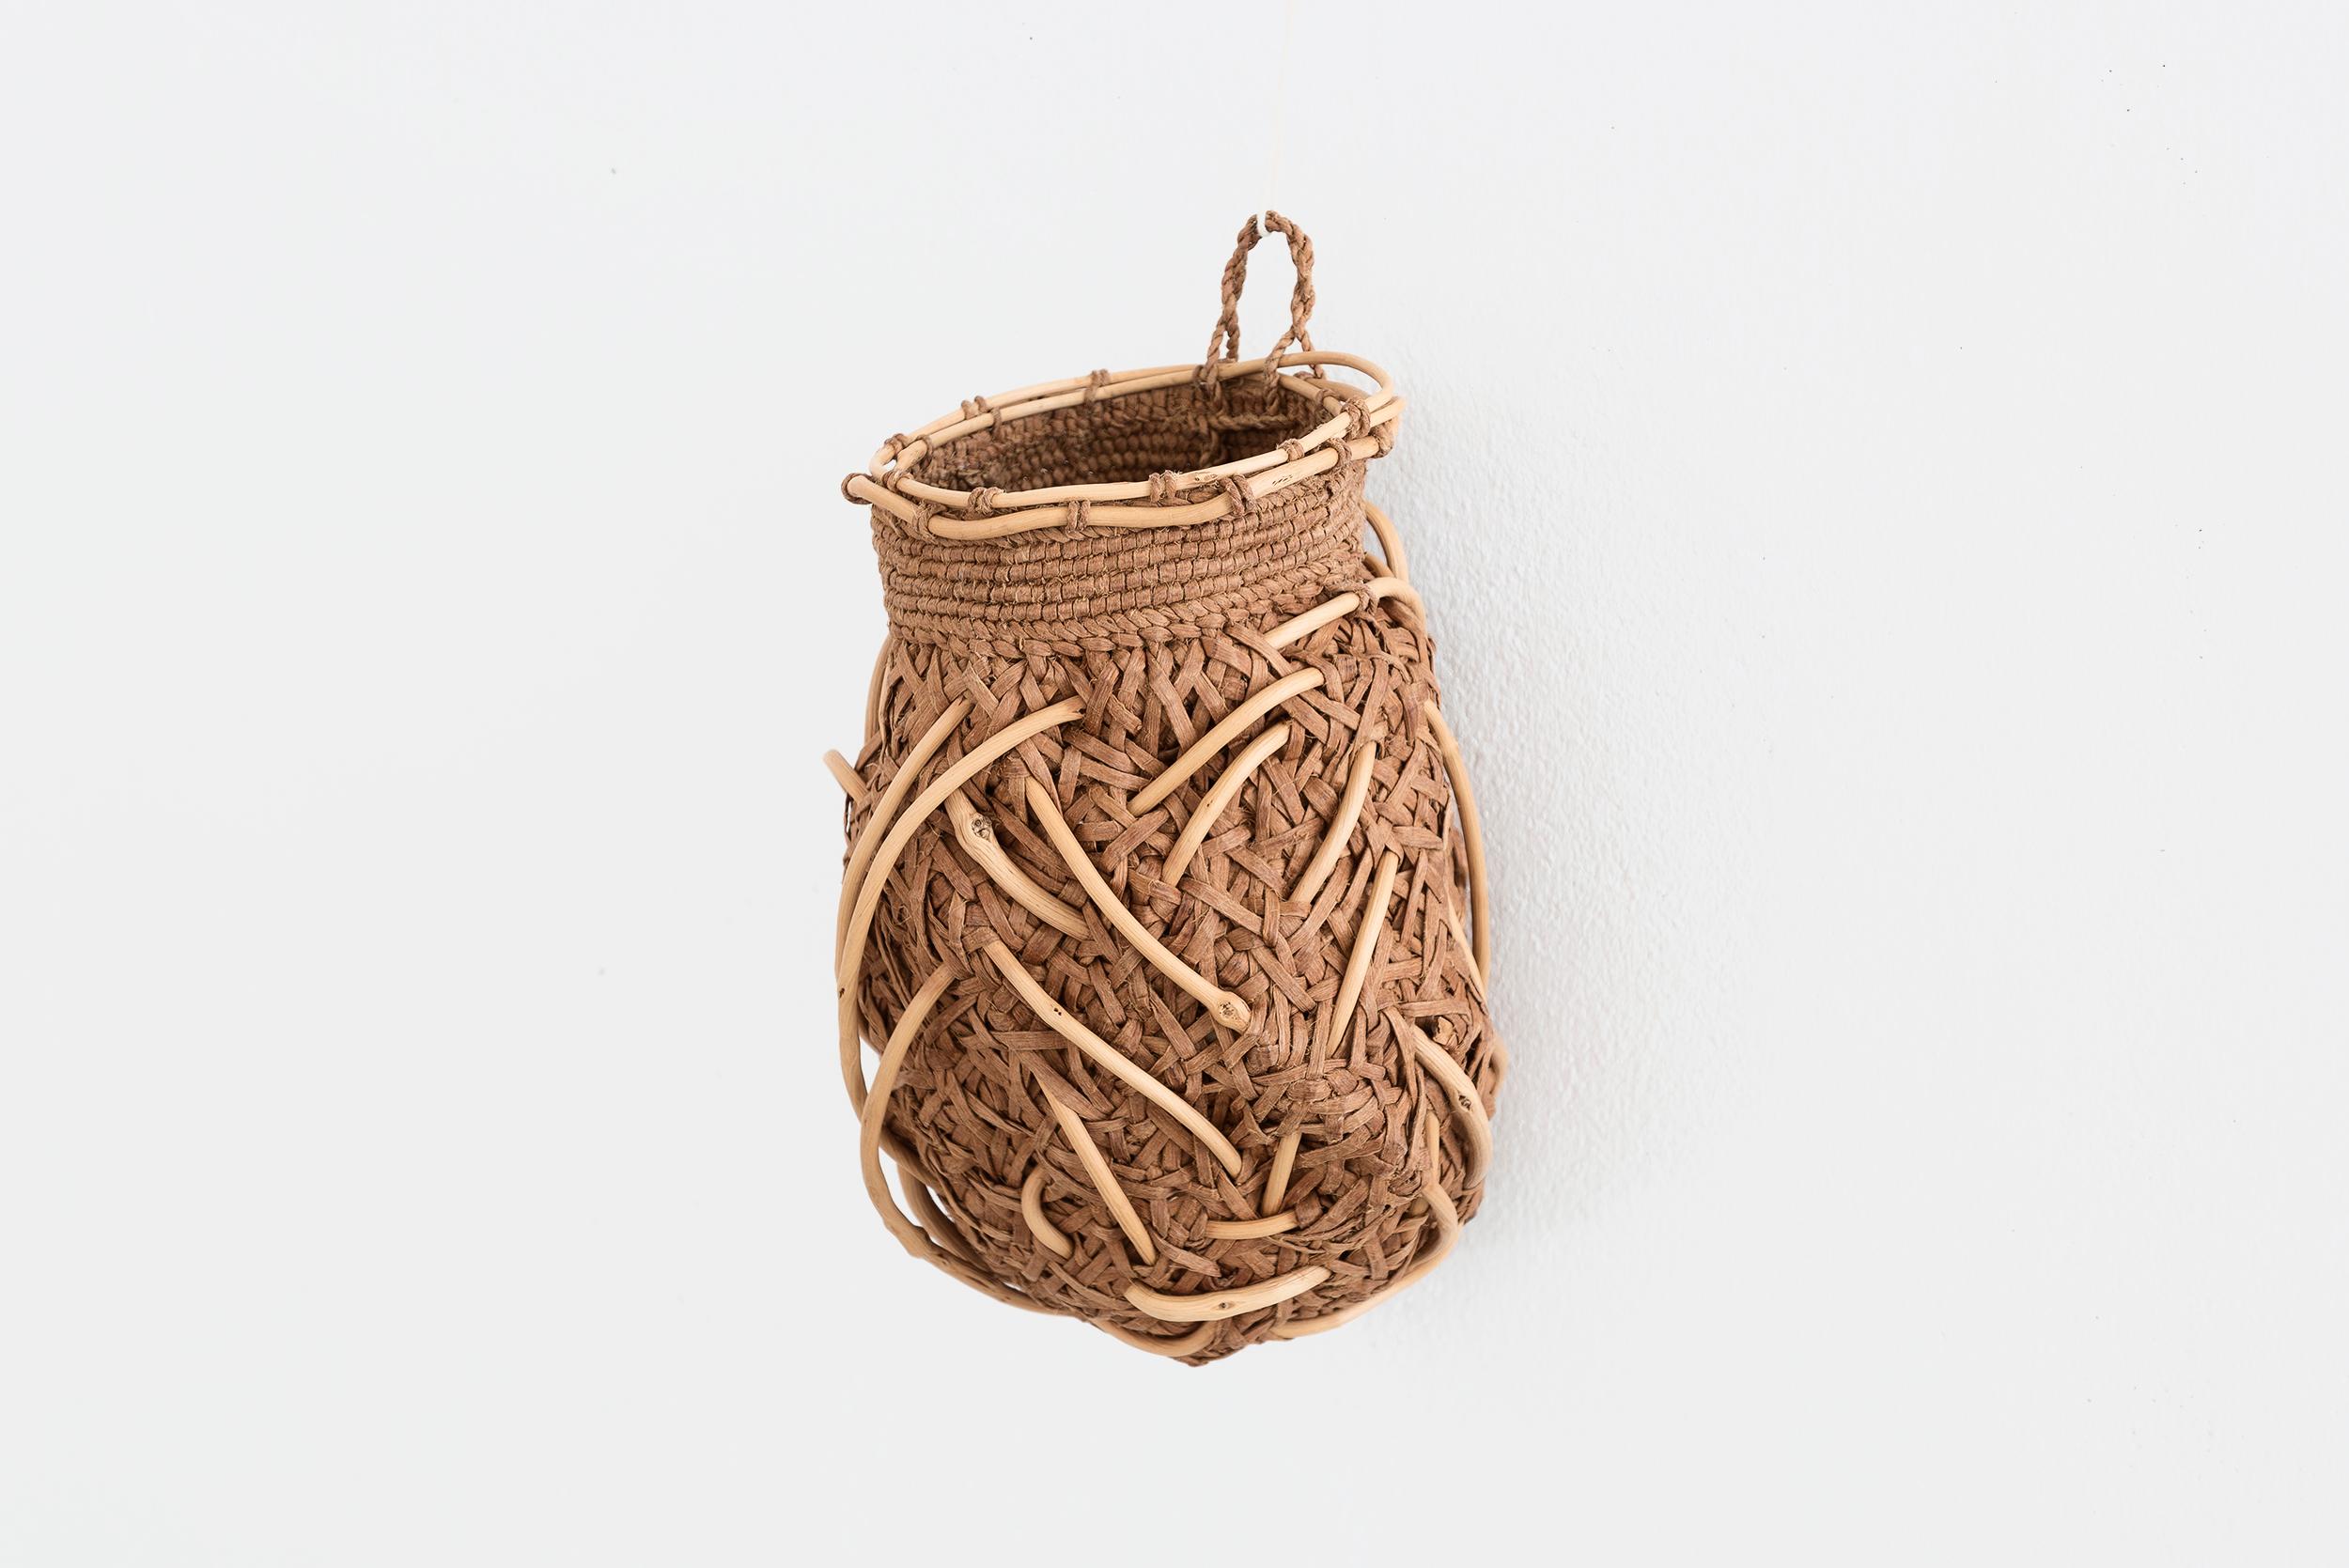 American Jennifer Zurick Nesting Instinct, Contemporary Crafts Baskets, Willow Bark, 2020 For Sale